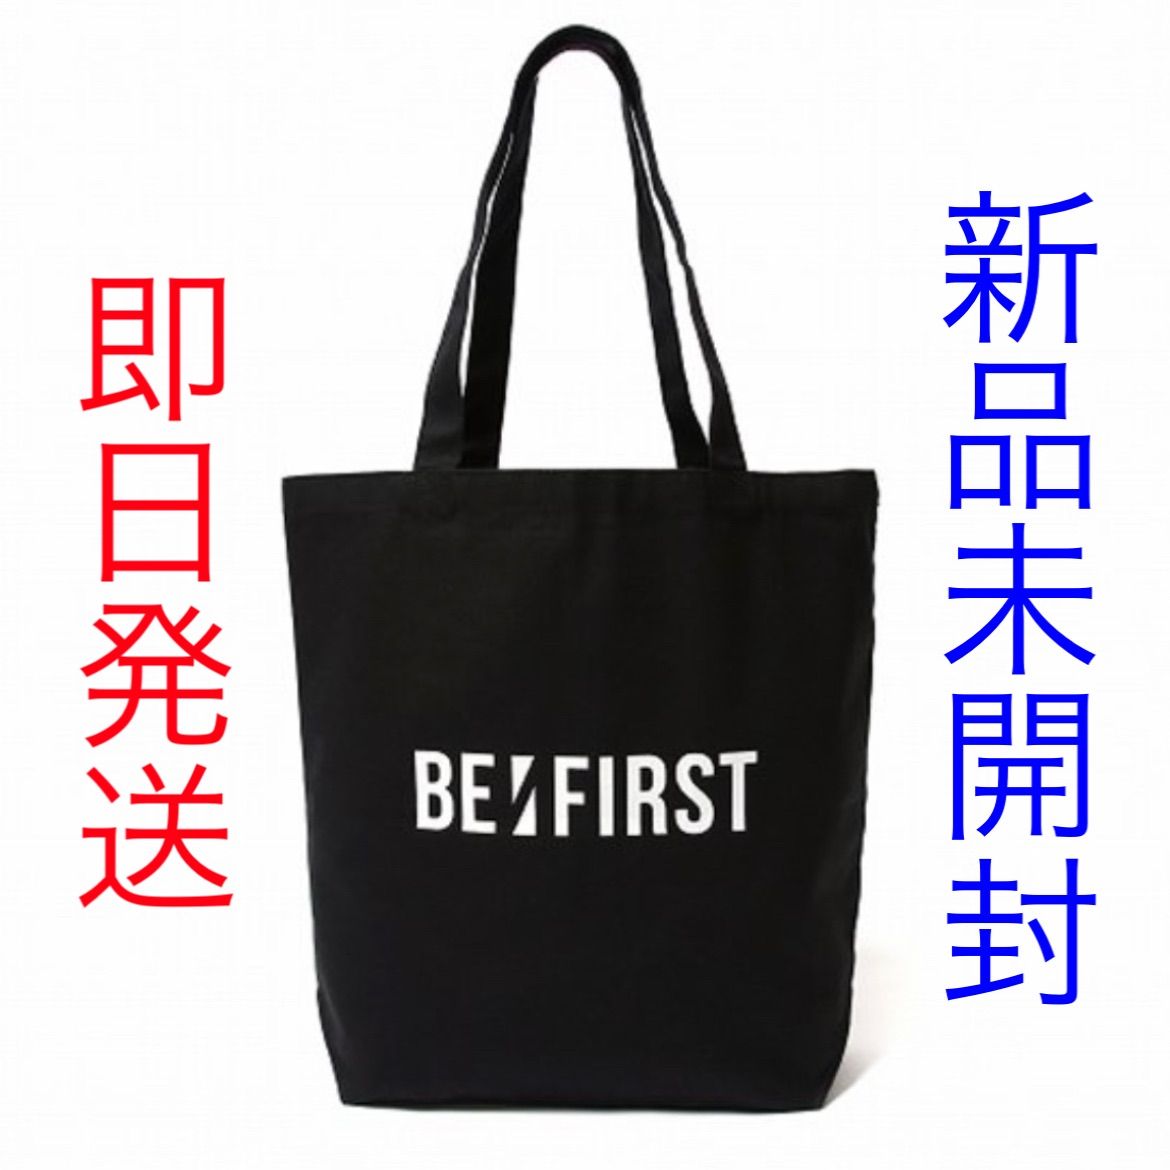 BE:FIRST 公式 ロゴ トート - アイドル